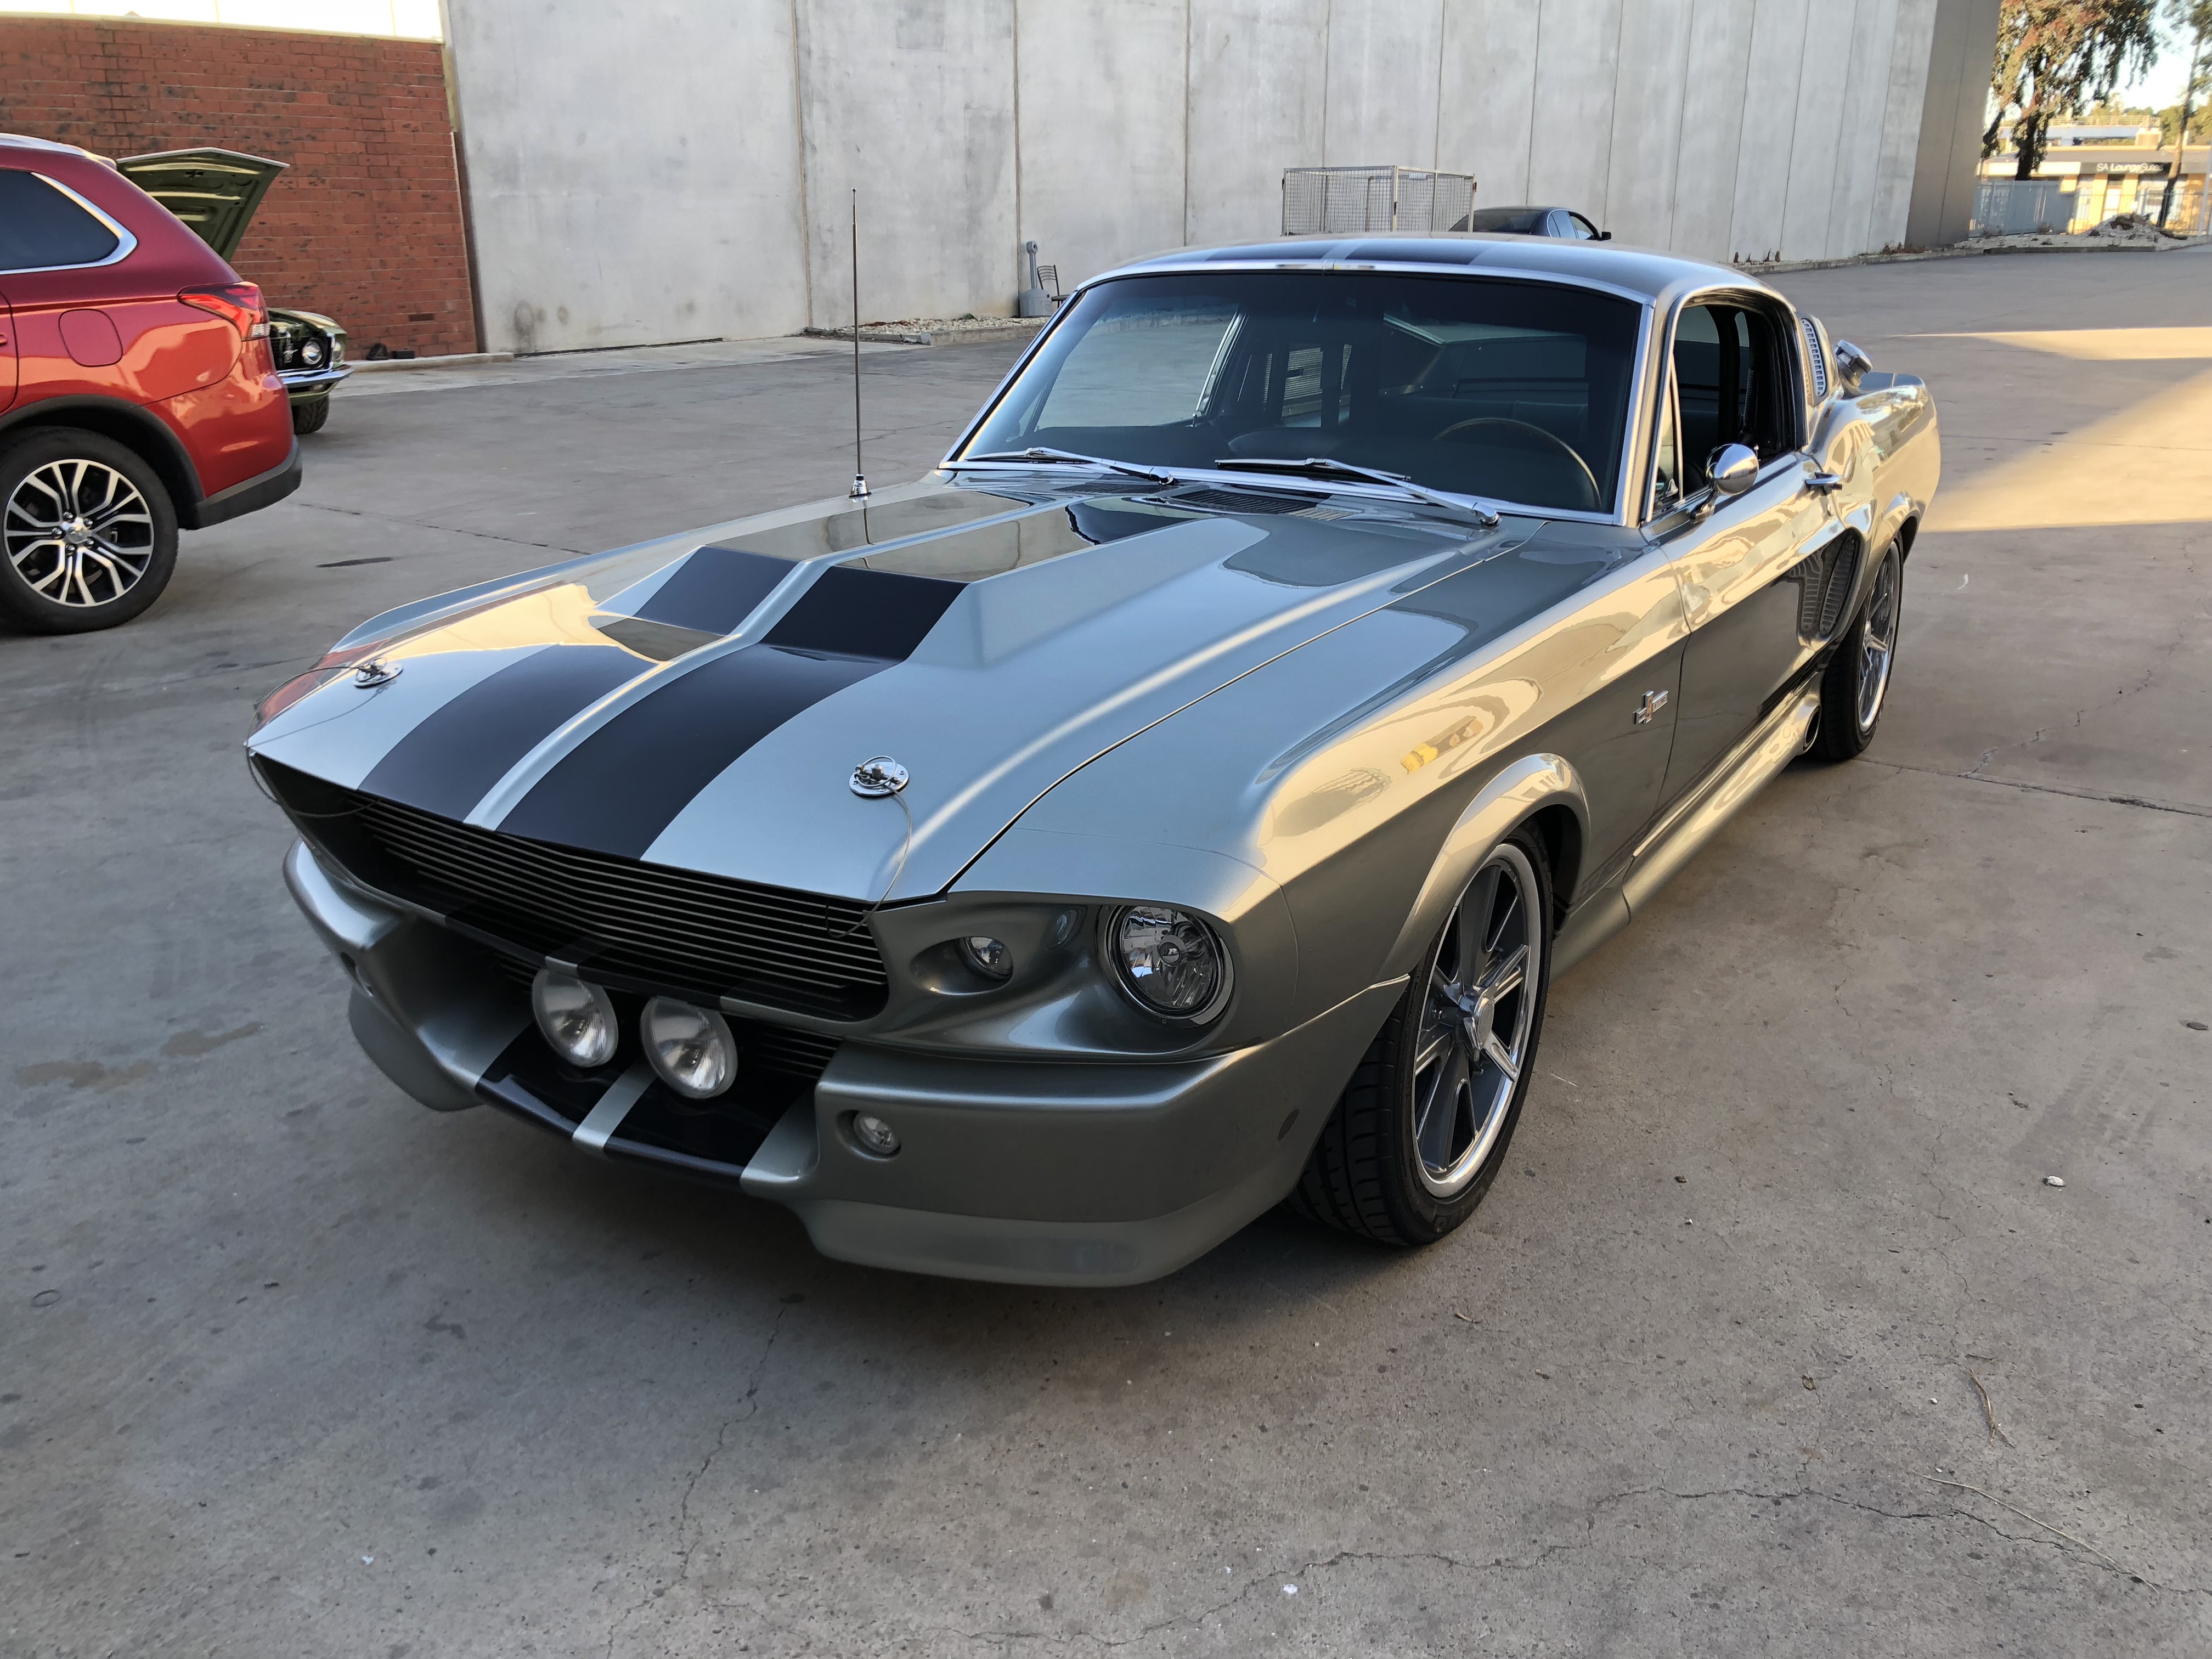 Classic 1967 Mustang.